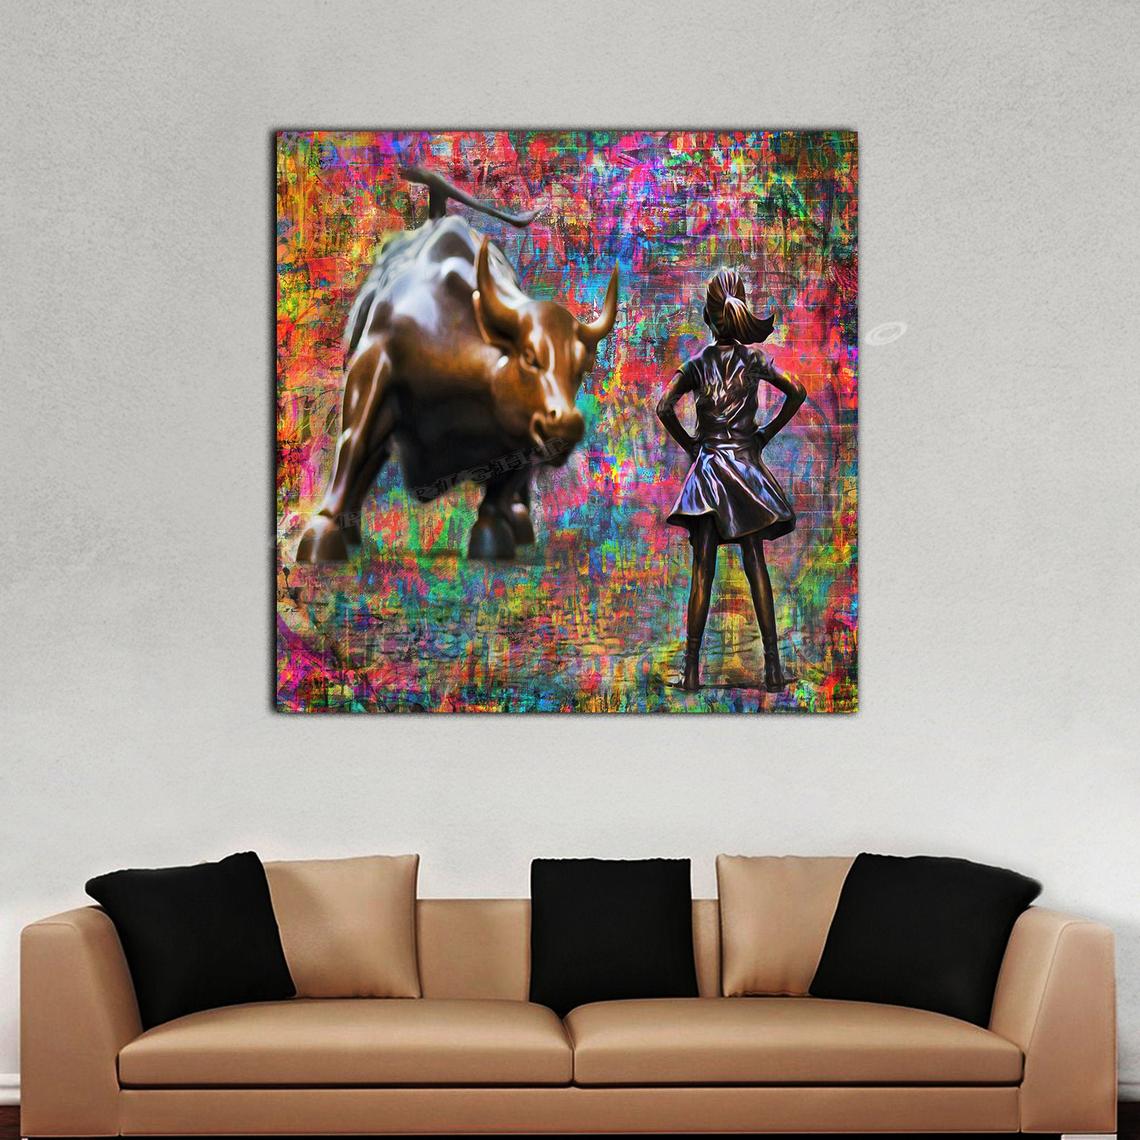 Wall Street Graffiti "Fearless Girl" Original Artwork by Memento Ready to Hang HD Canvas- Wall Street Bull